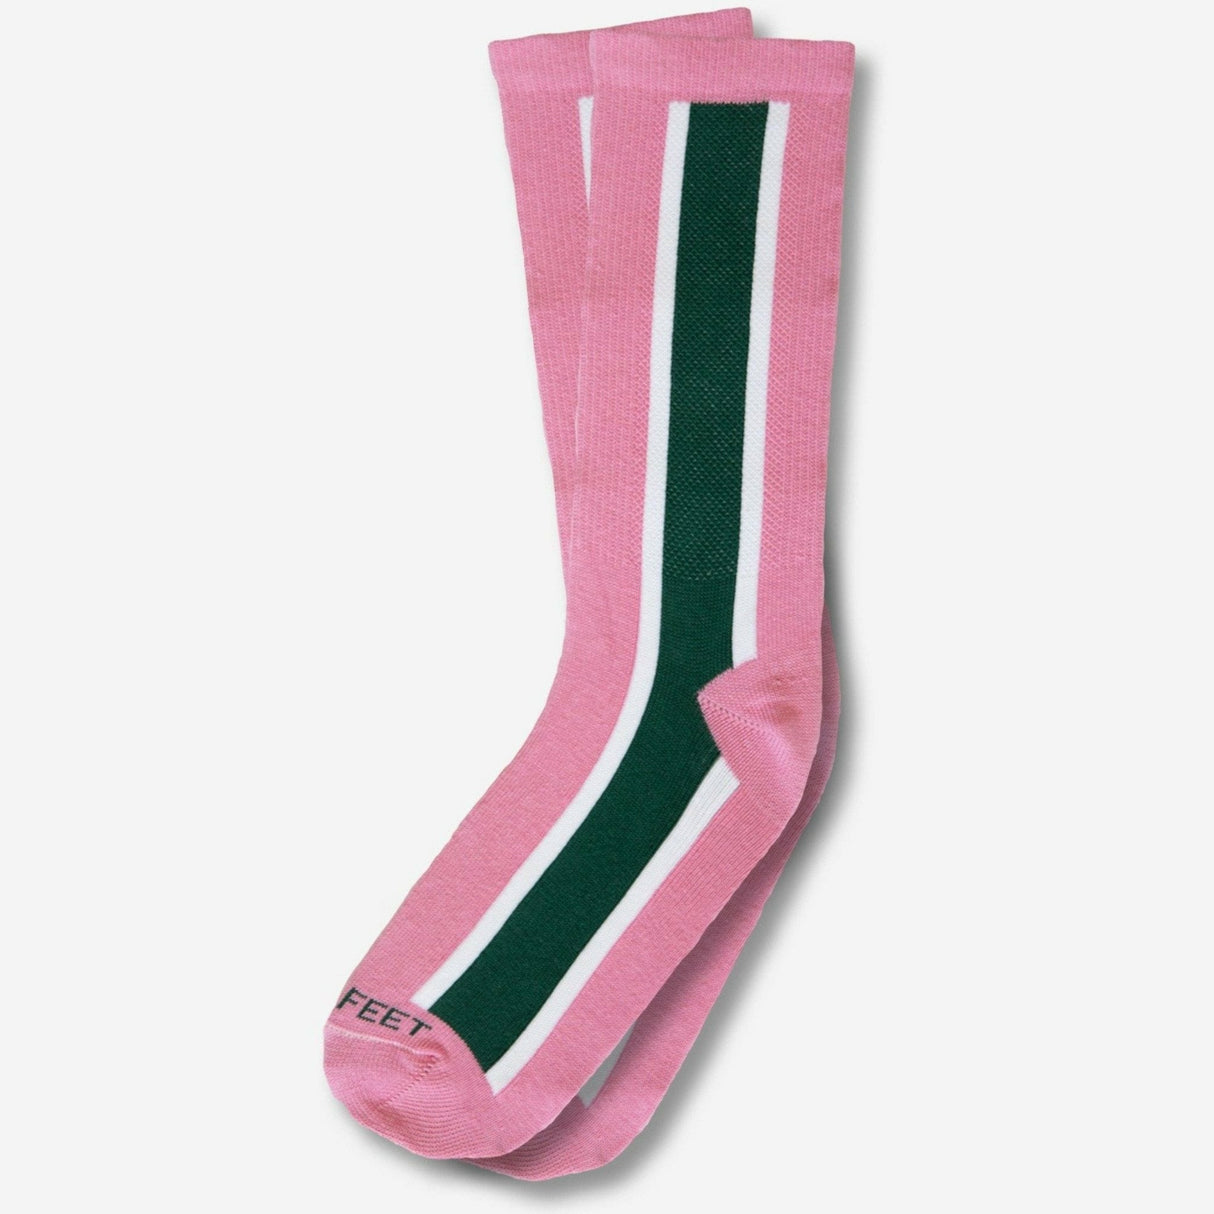 Hippy Feet Vertical Stripes Crew Socks  -  Small / Pink